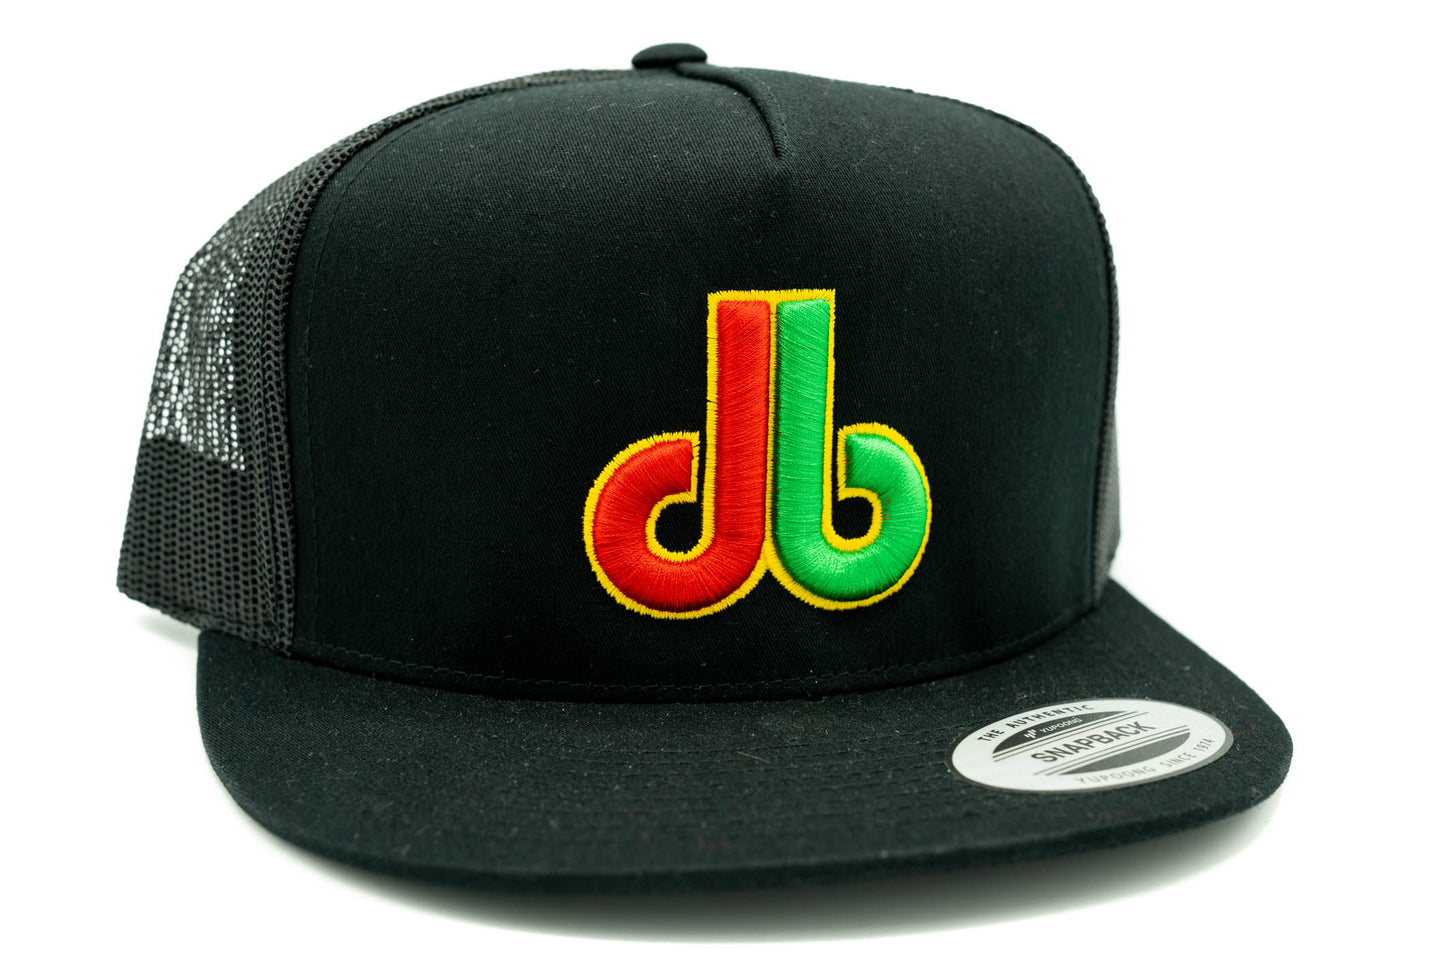 Cornhole Hat - Rasta Themed db hat